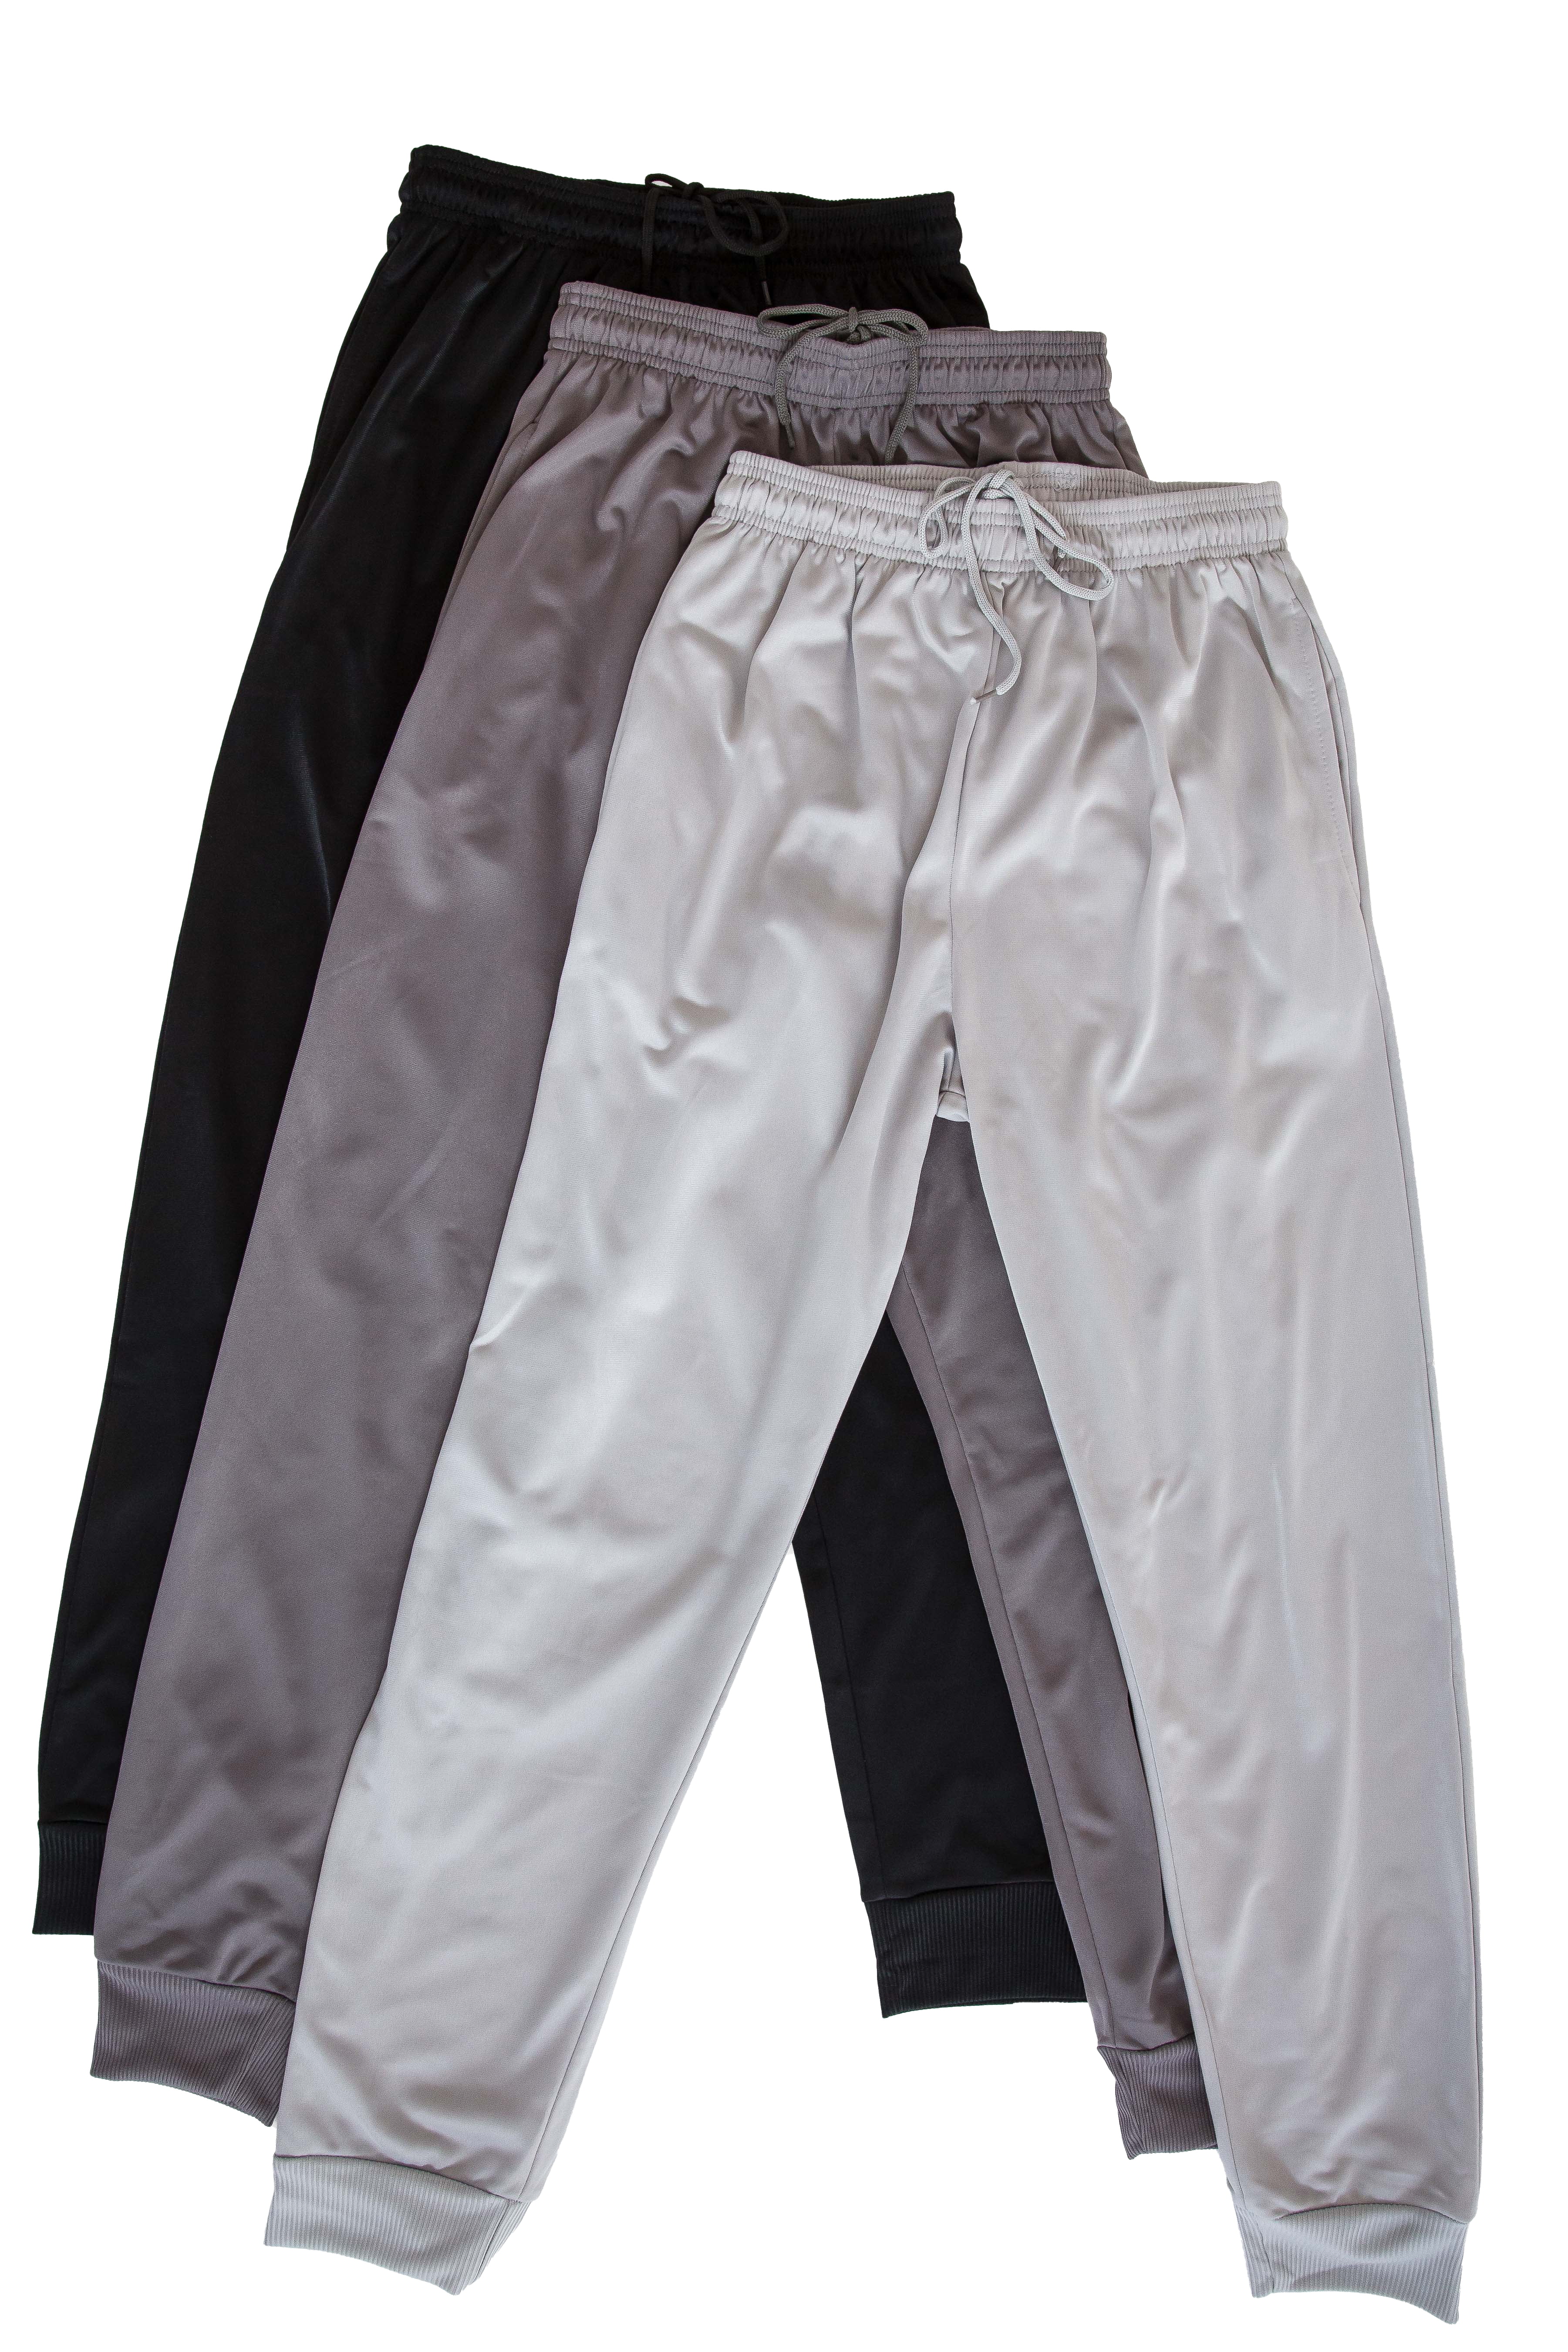 Pro Athlete Boys’ Active Sweatpants 8-16 2 Pack Basic Performance Fleece Jogger Pants 